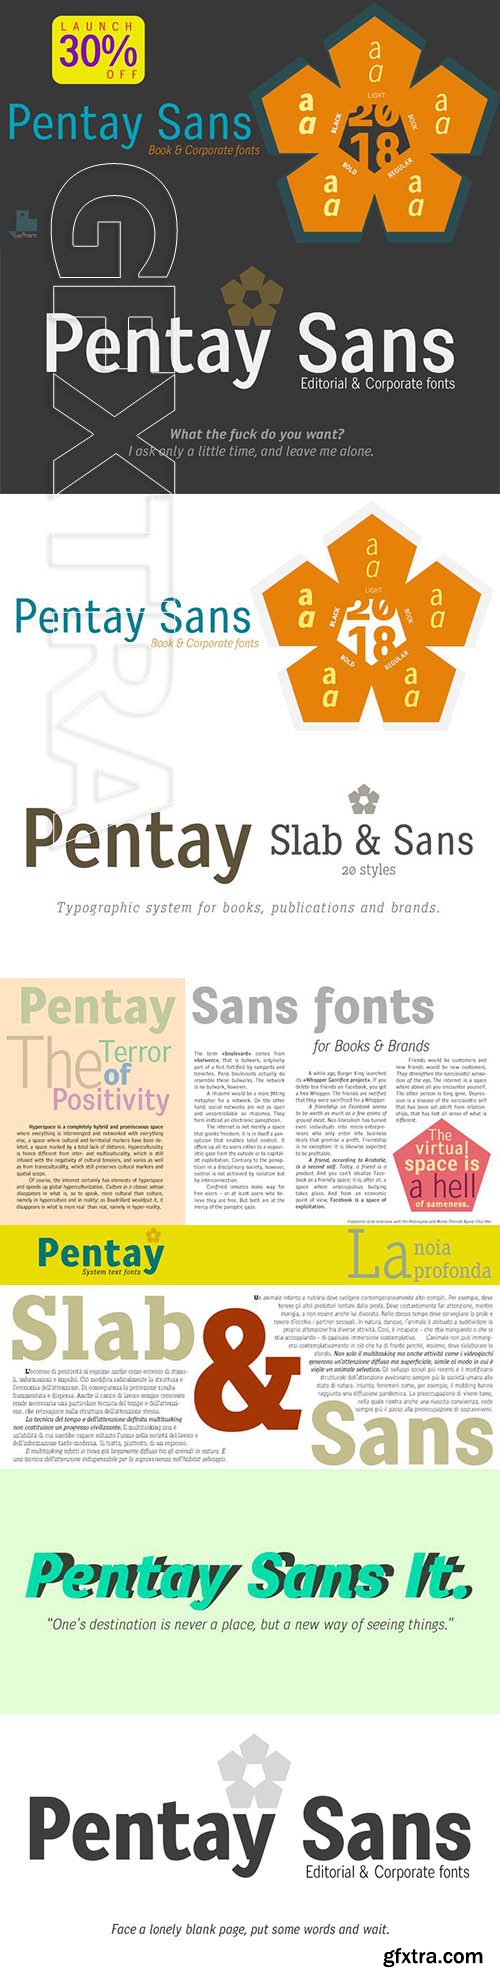 Pentay Sans font family